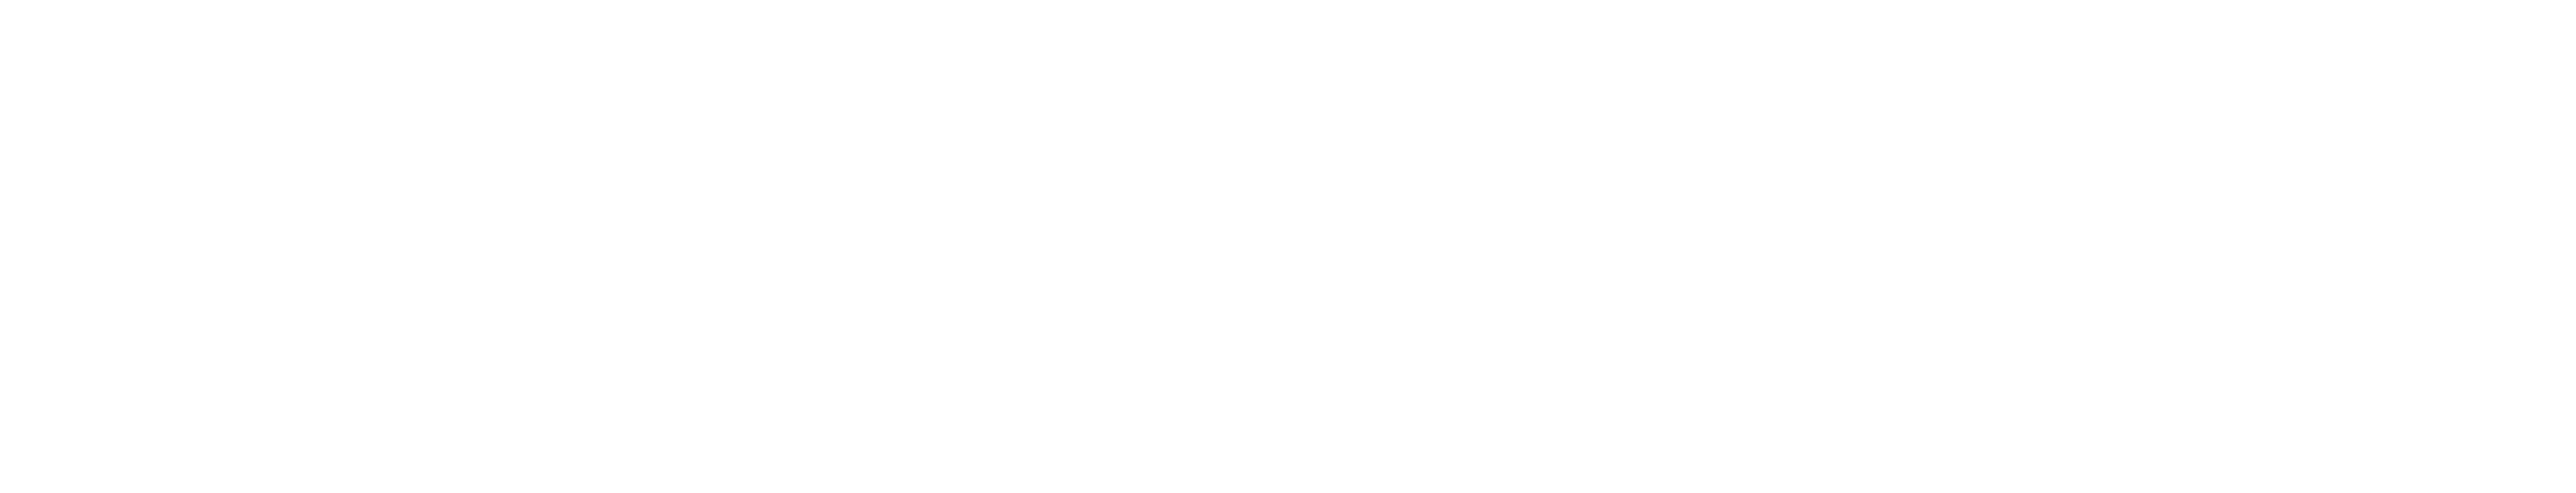 k12 insight logo